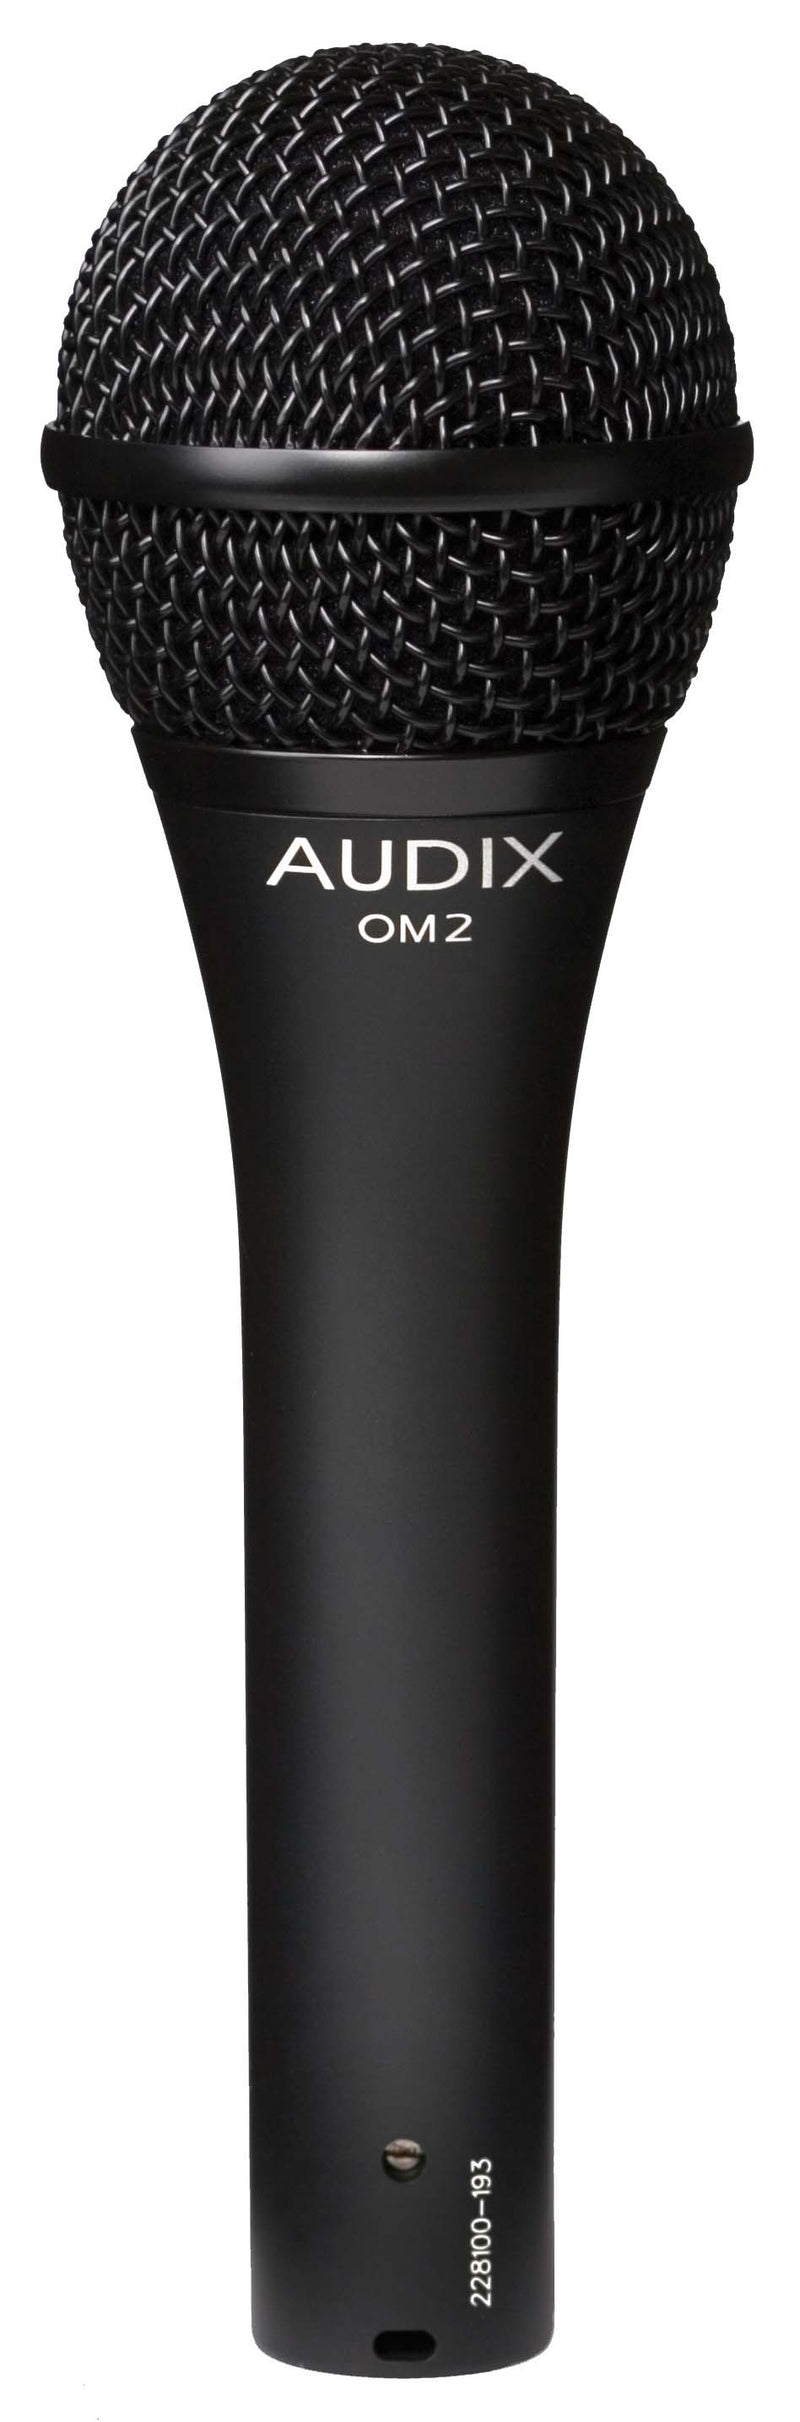 🇺🇸 Audix OM2 Dynamic Vocal Microphone